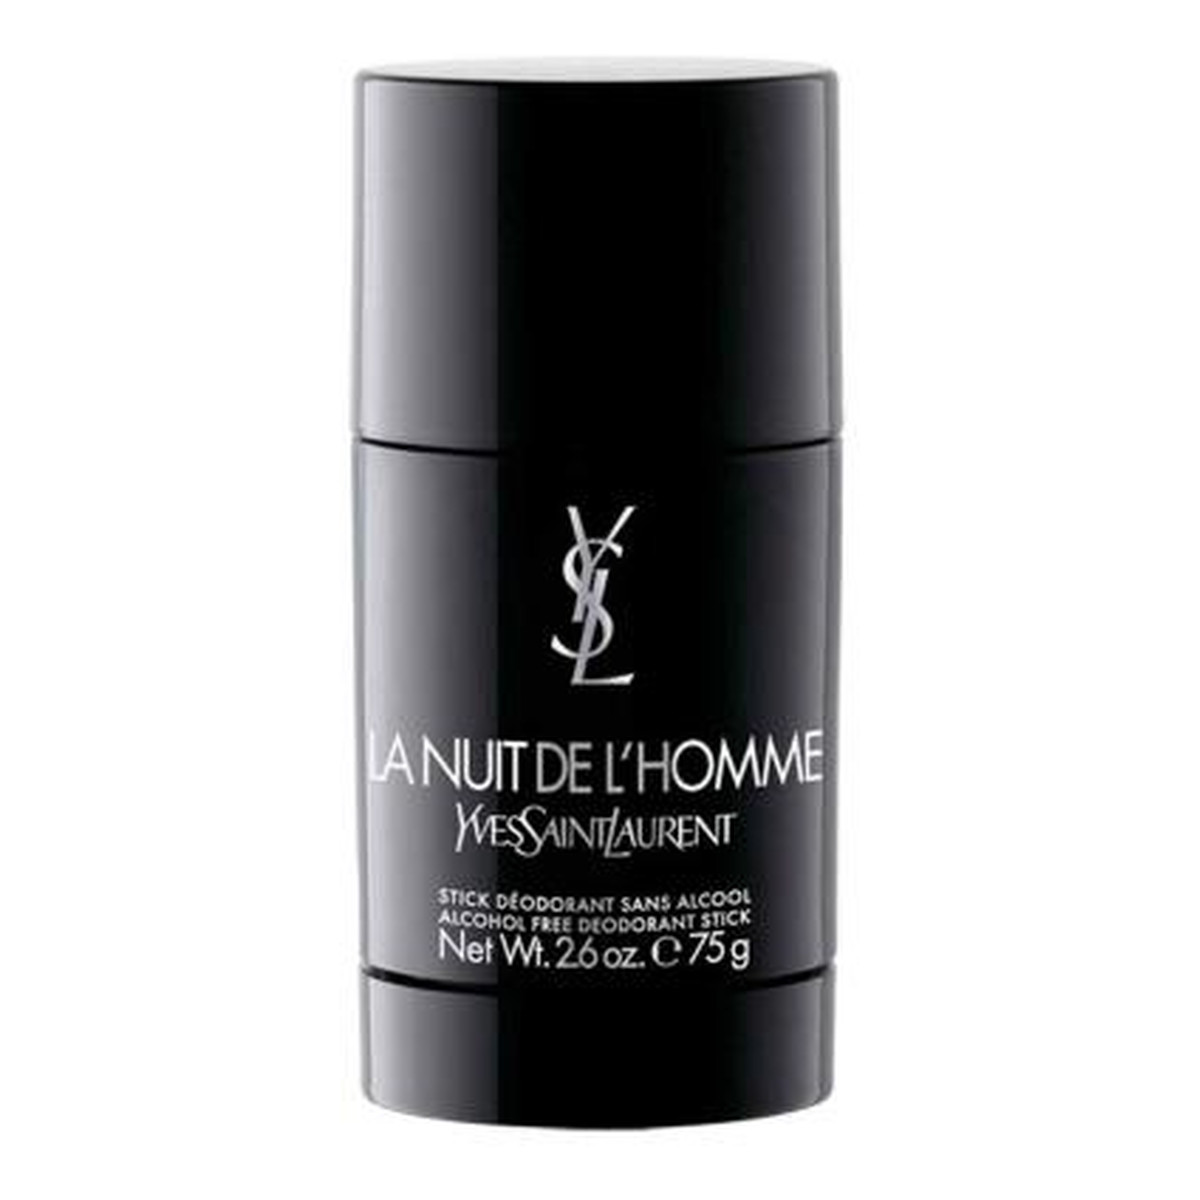 Yves Saint Laurent La Nuit de L’Homme dezodorant w sztyfcie dla mężczyzn 75g